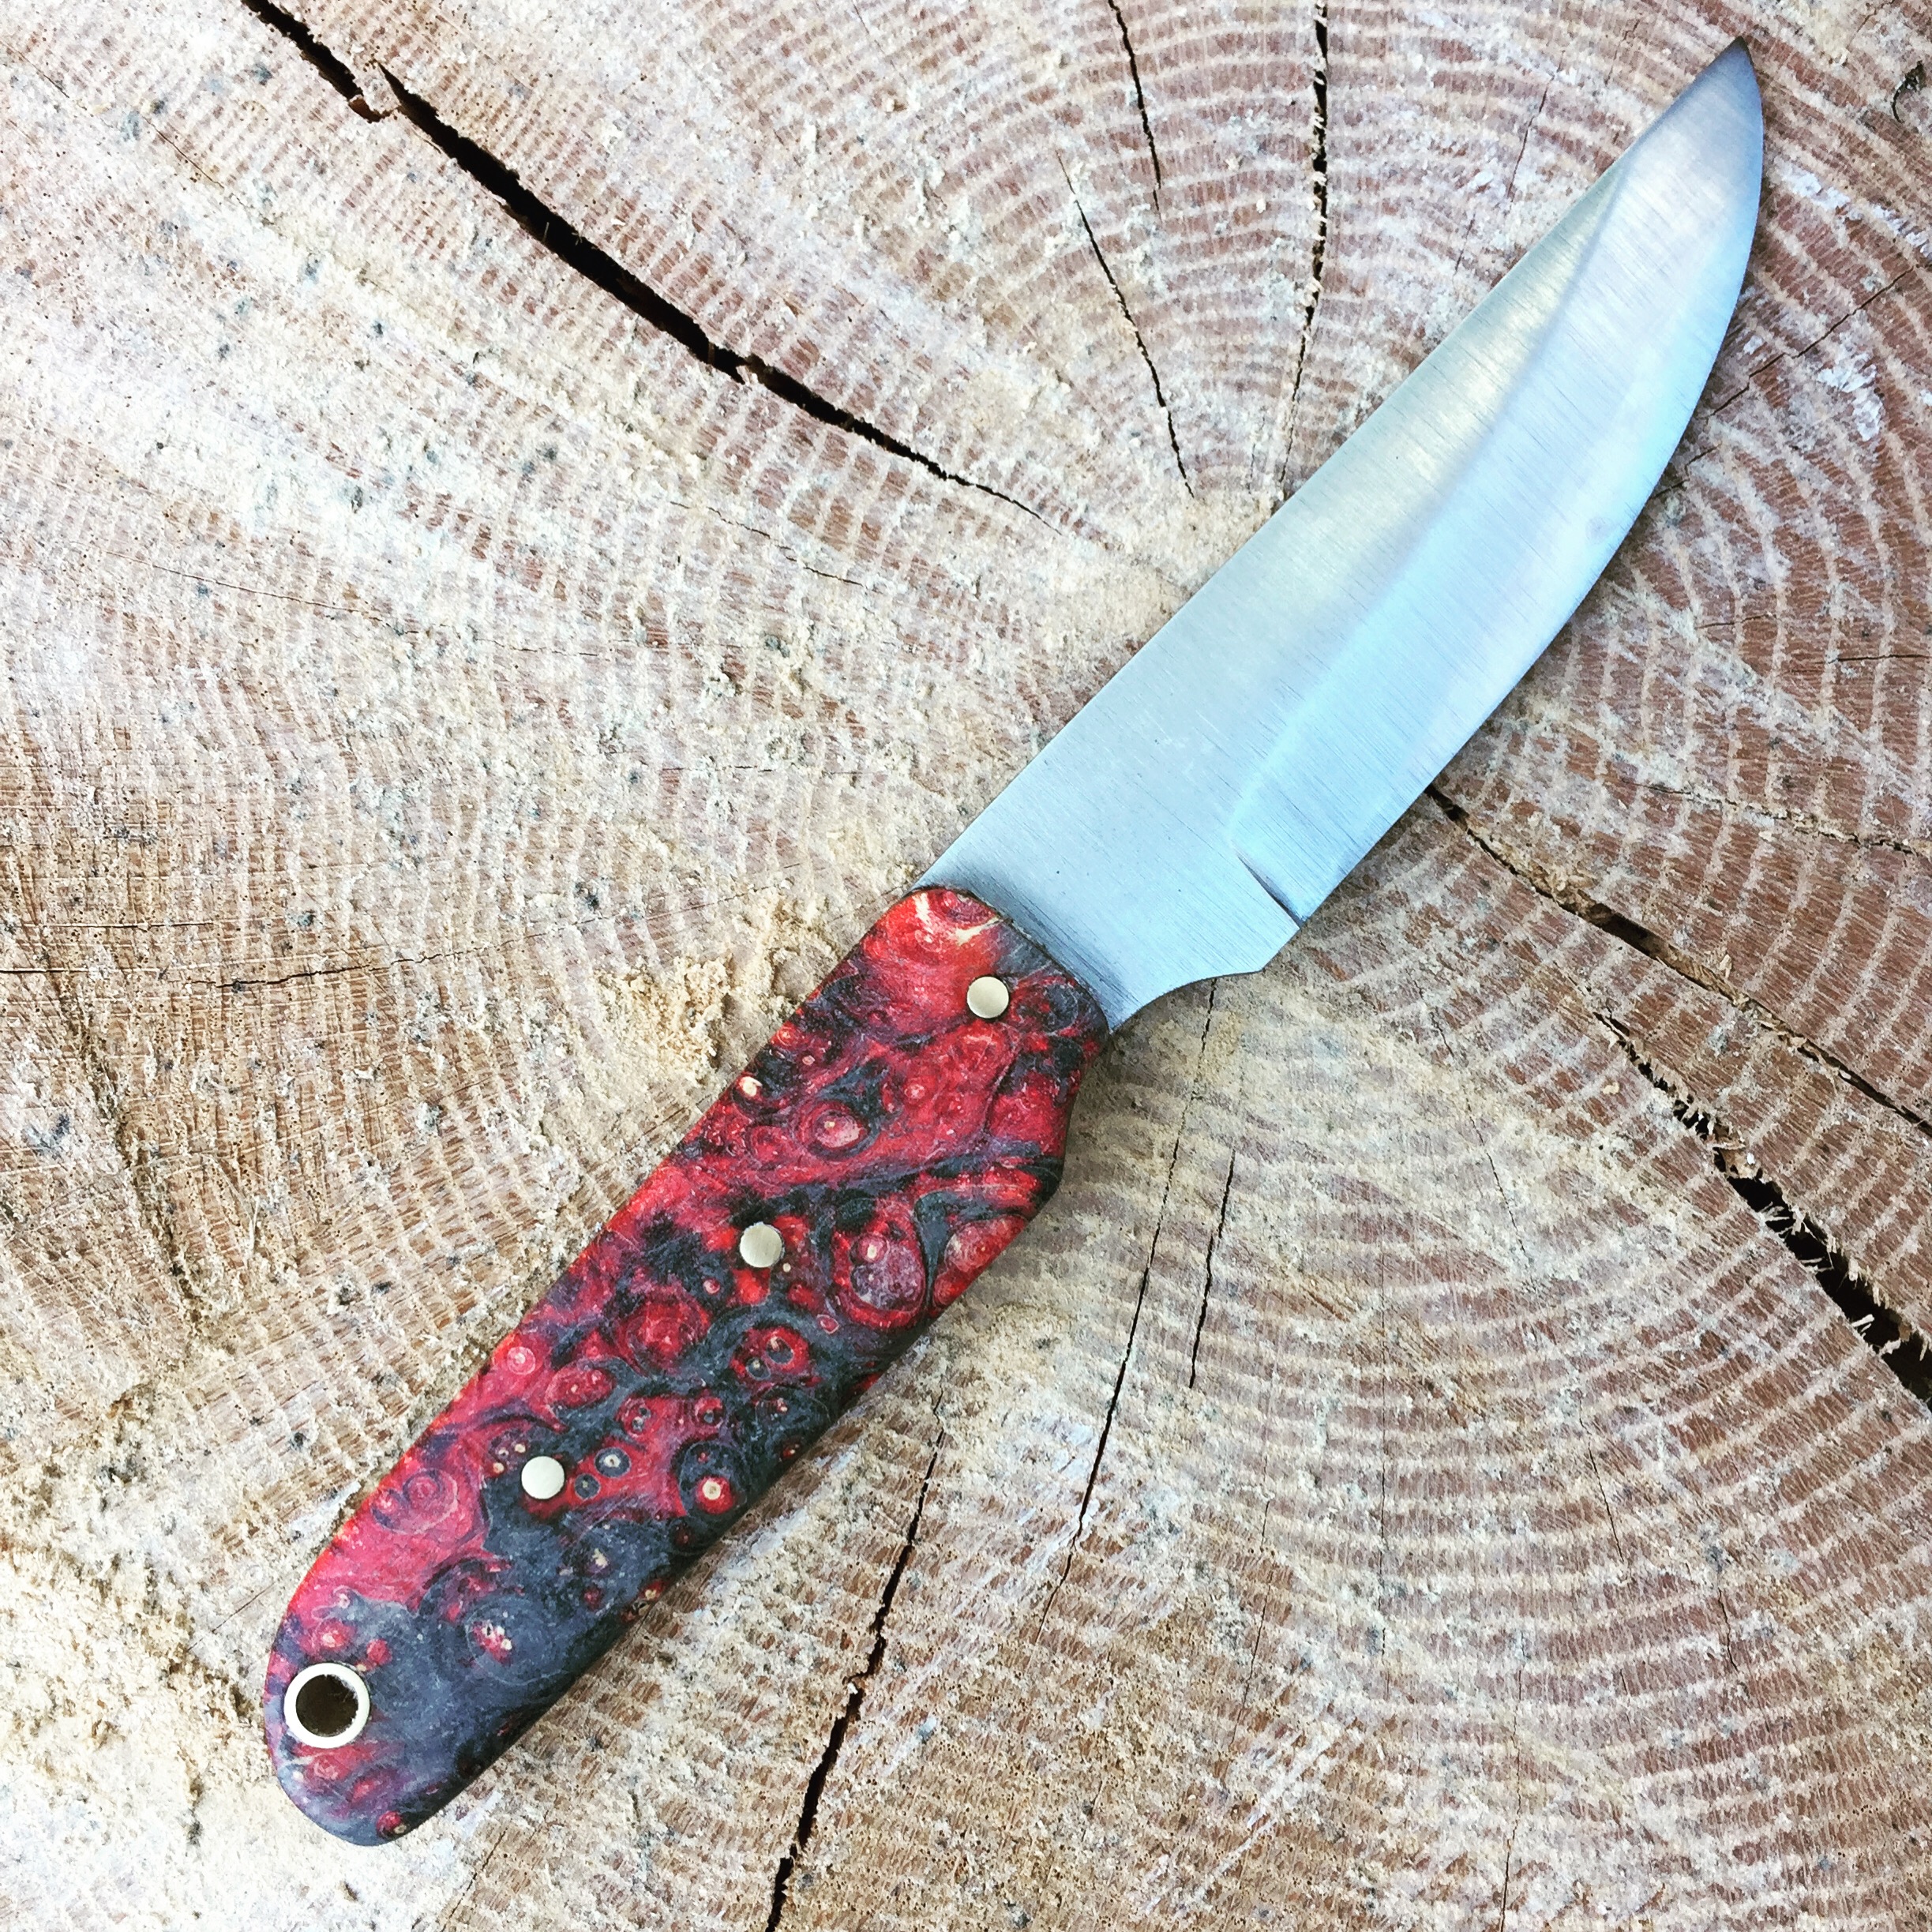 maple burl knife